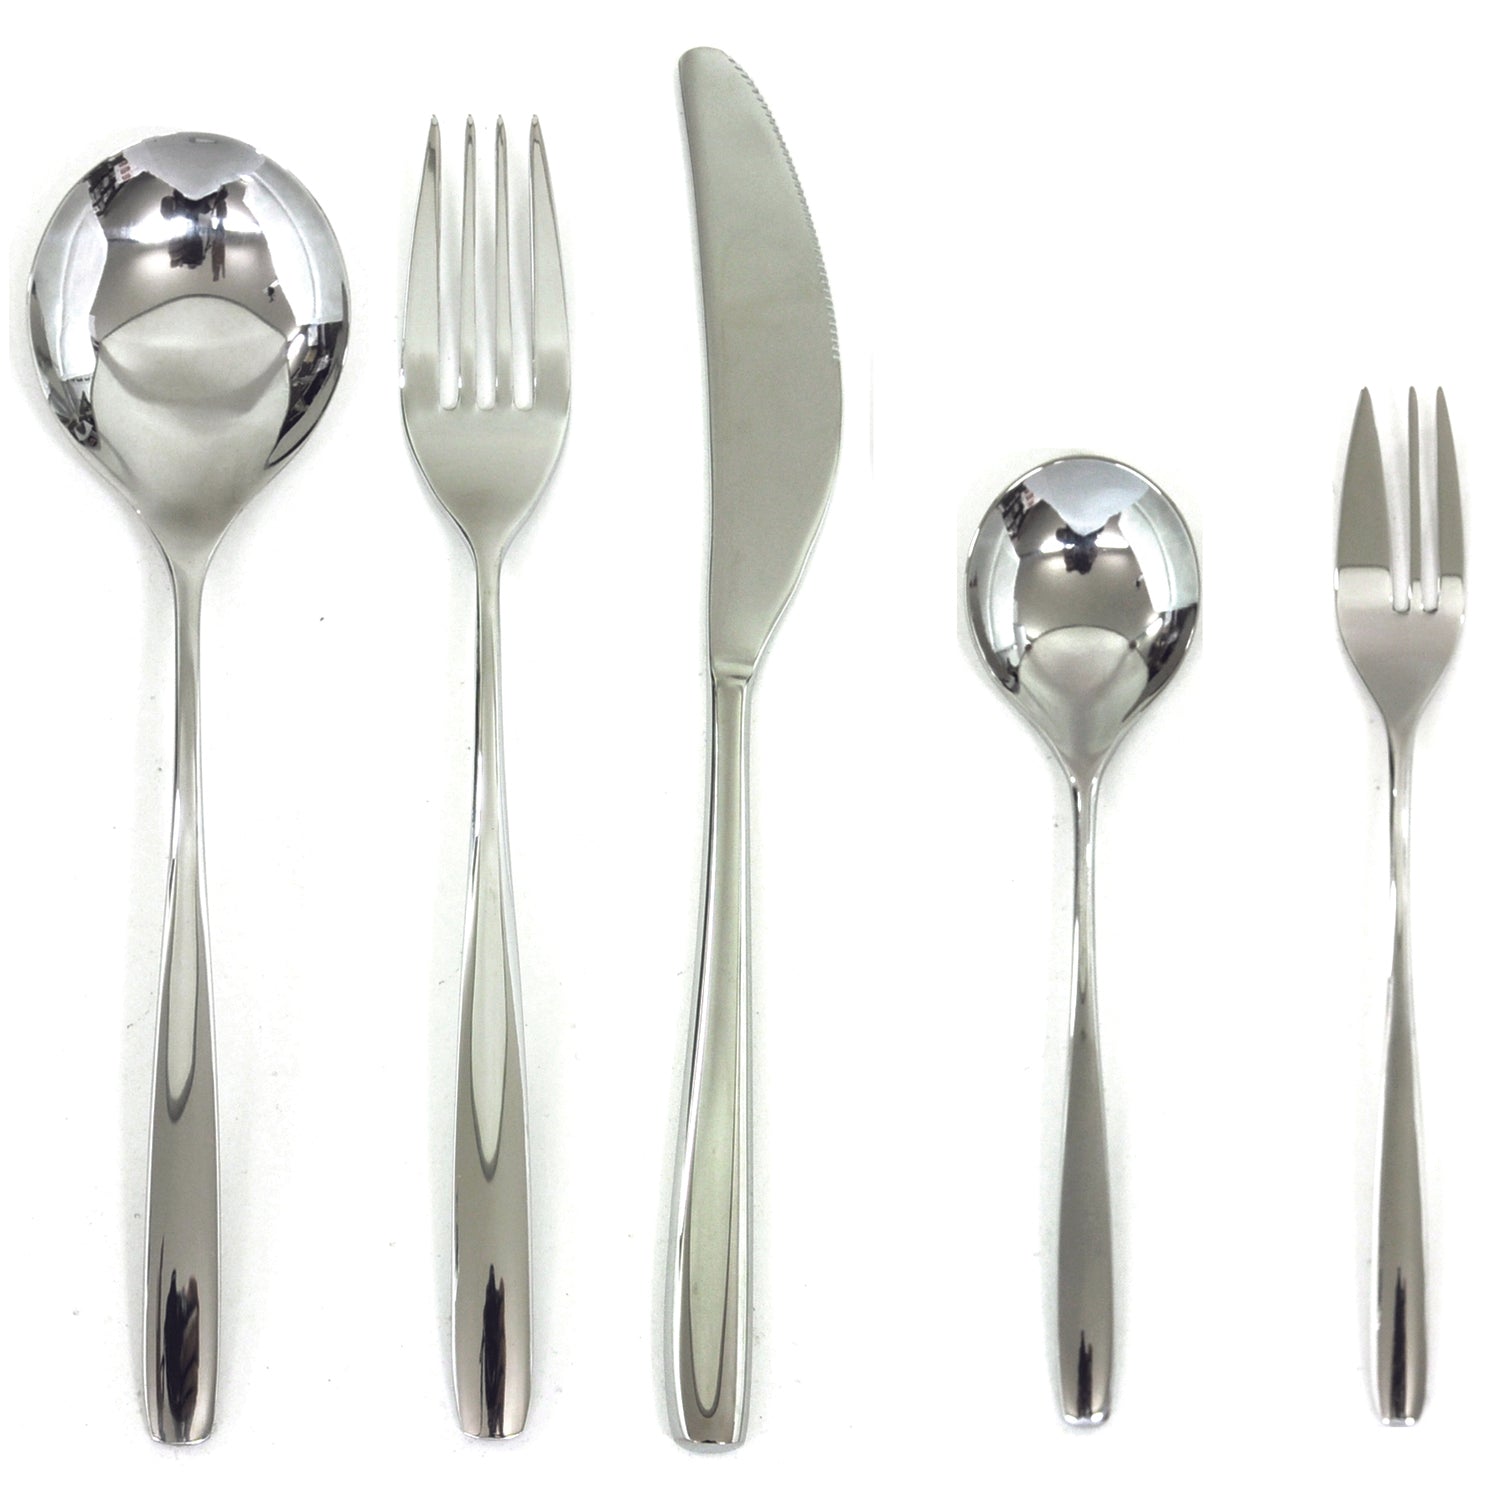 Mepra Cutlery Set, 87 Pieces - Stainless Steel 18/10